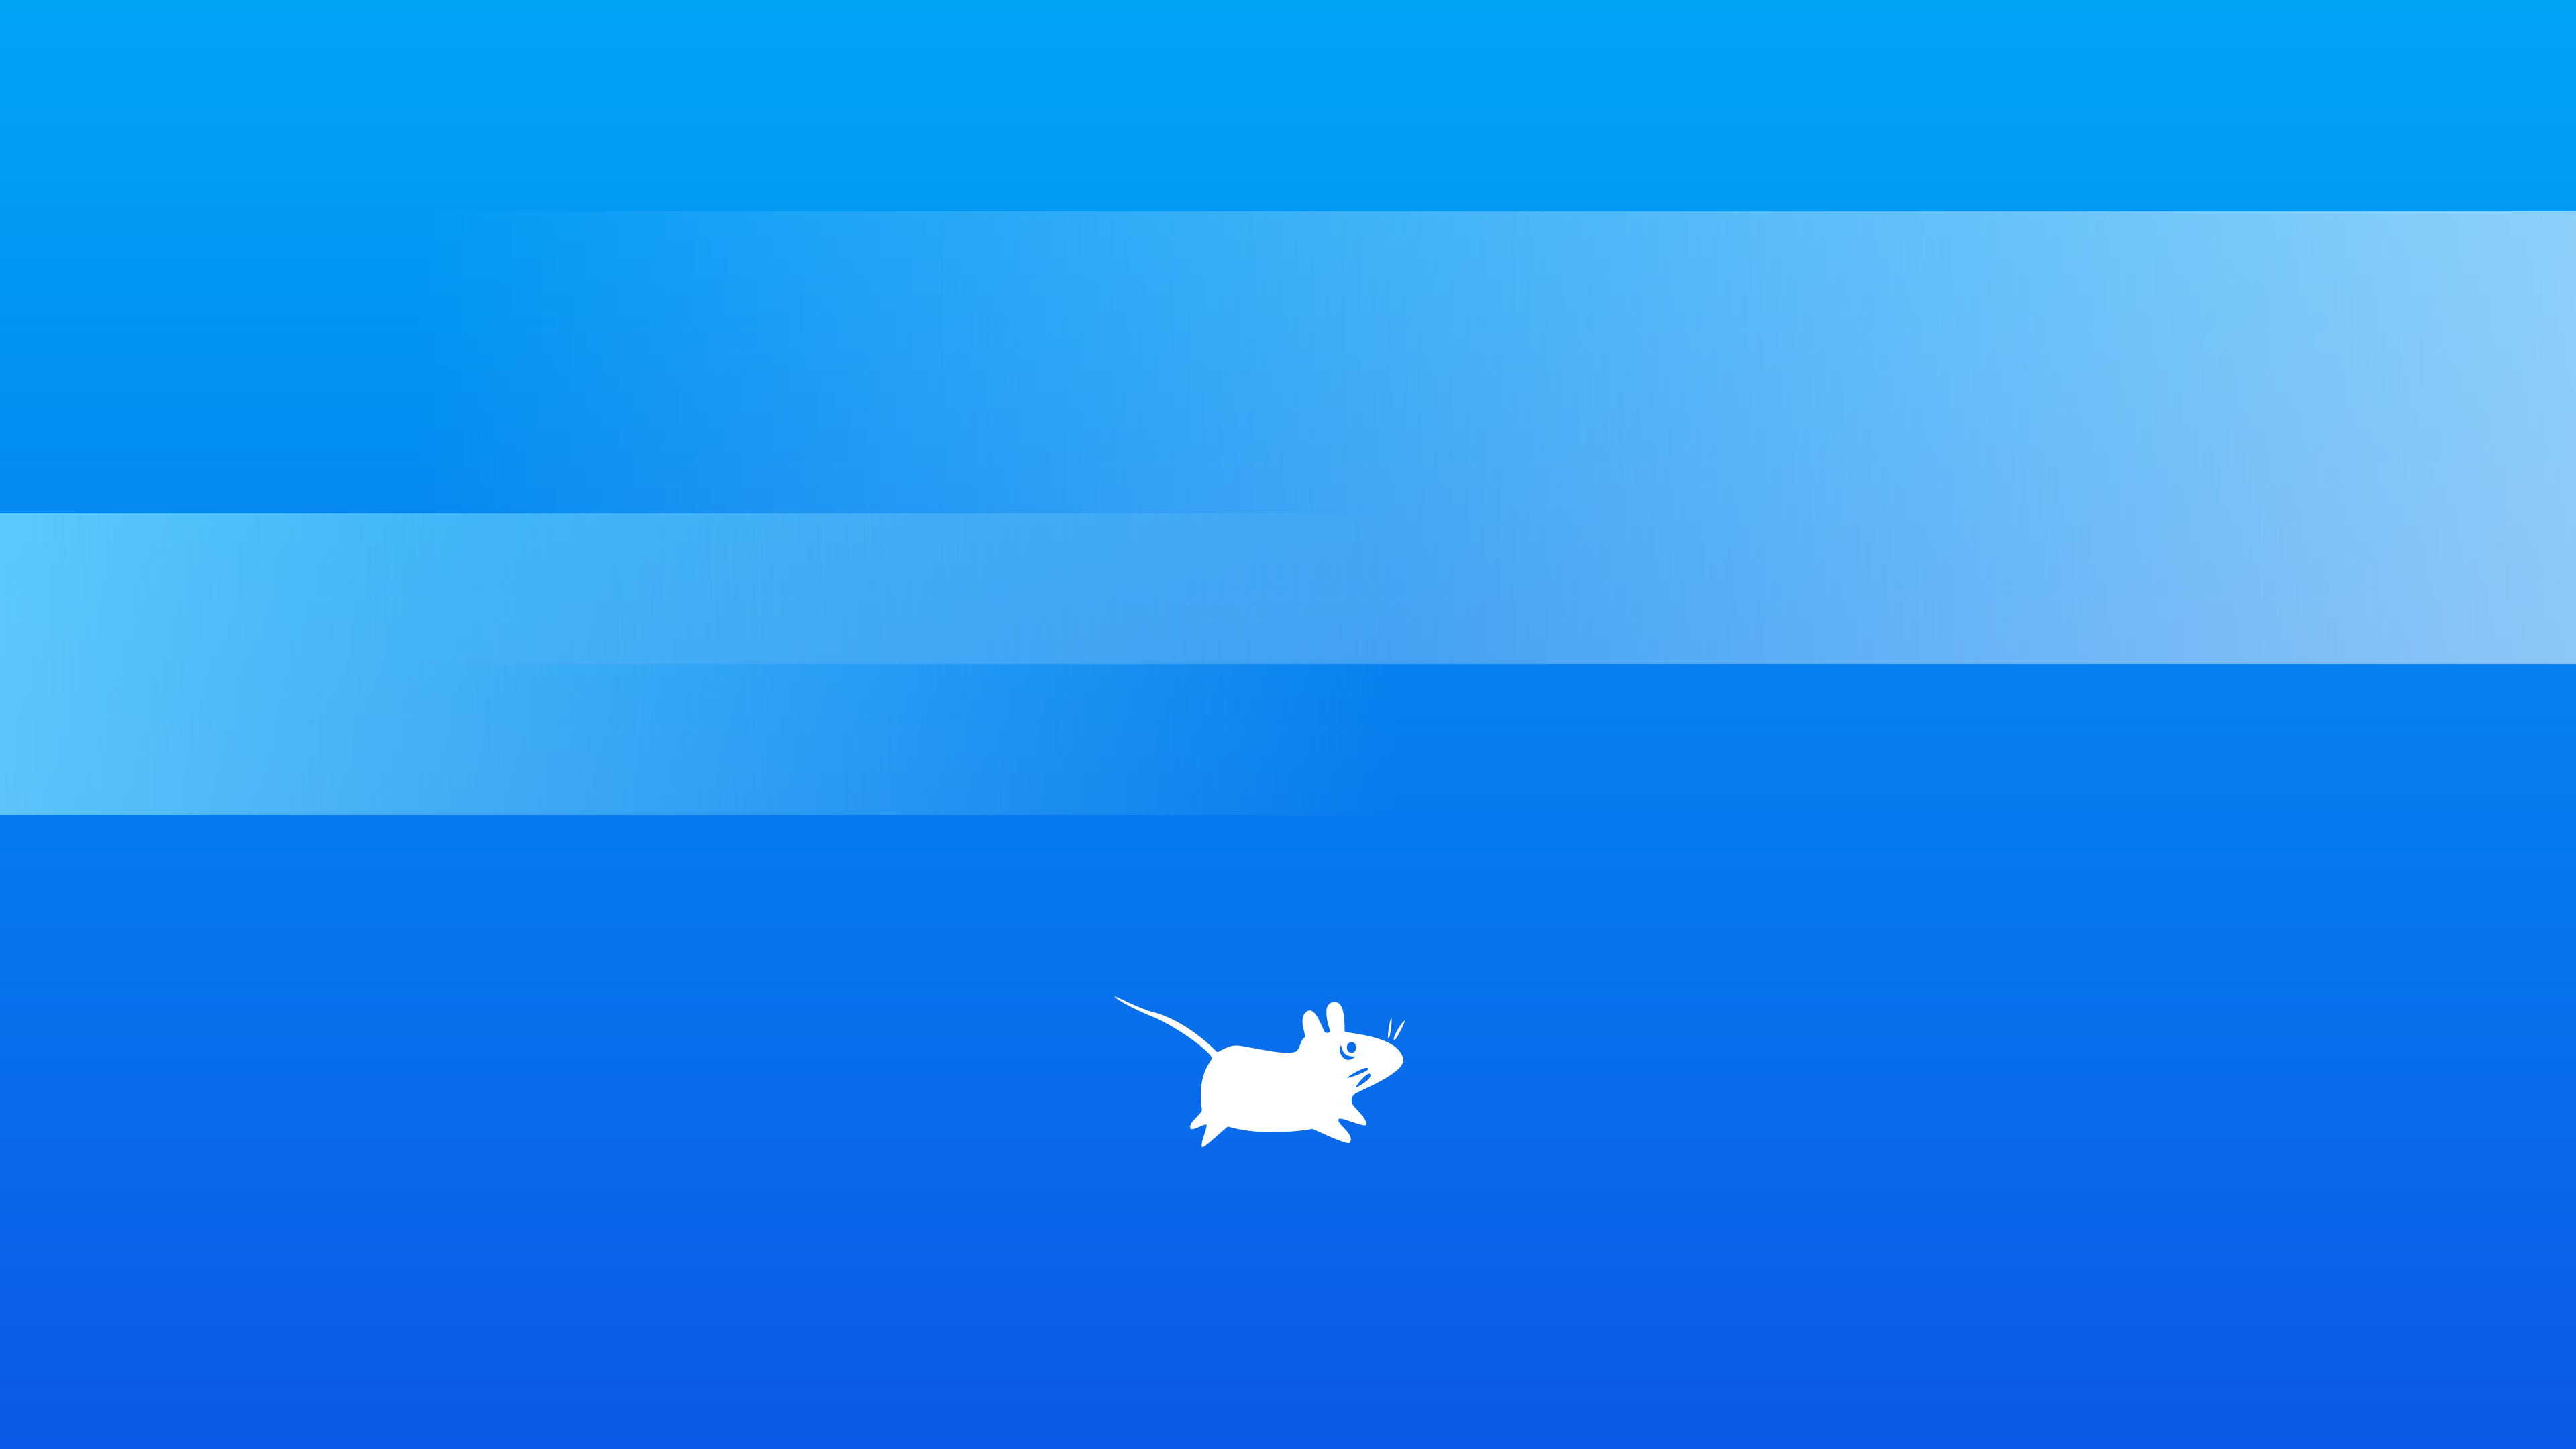 General 3840x2160 Xfce blue background minimalism Linux simple background mice animals